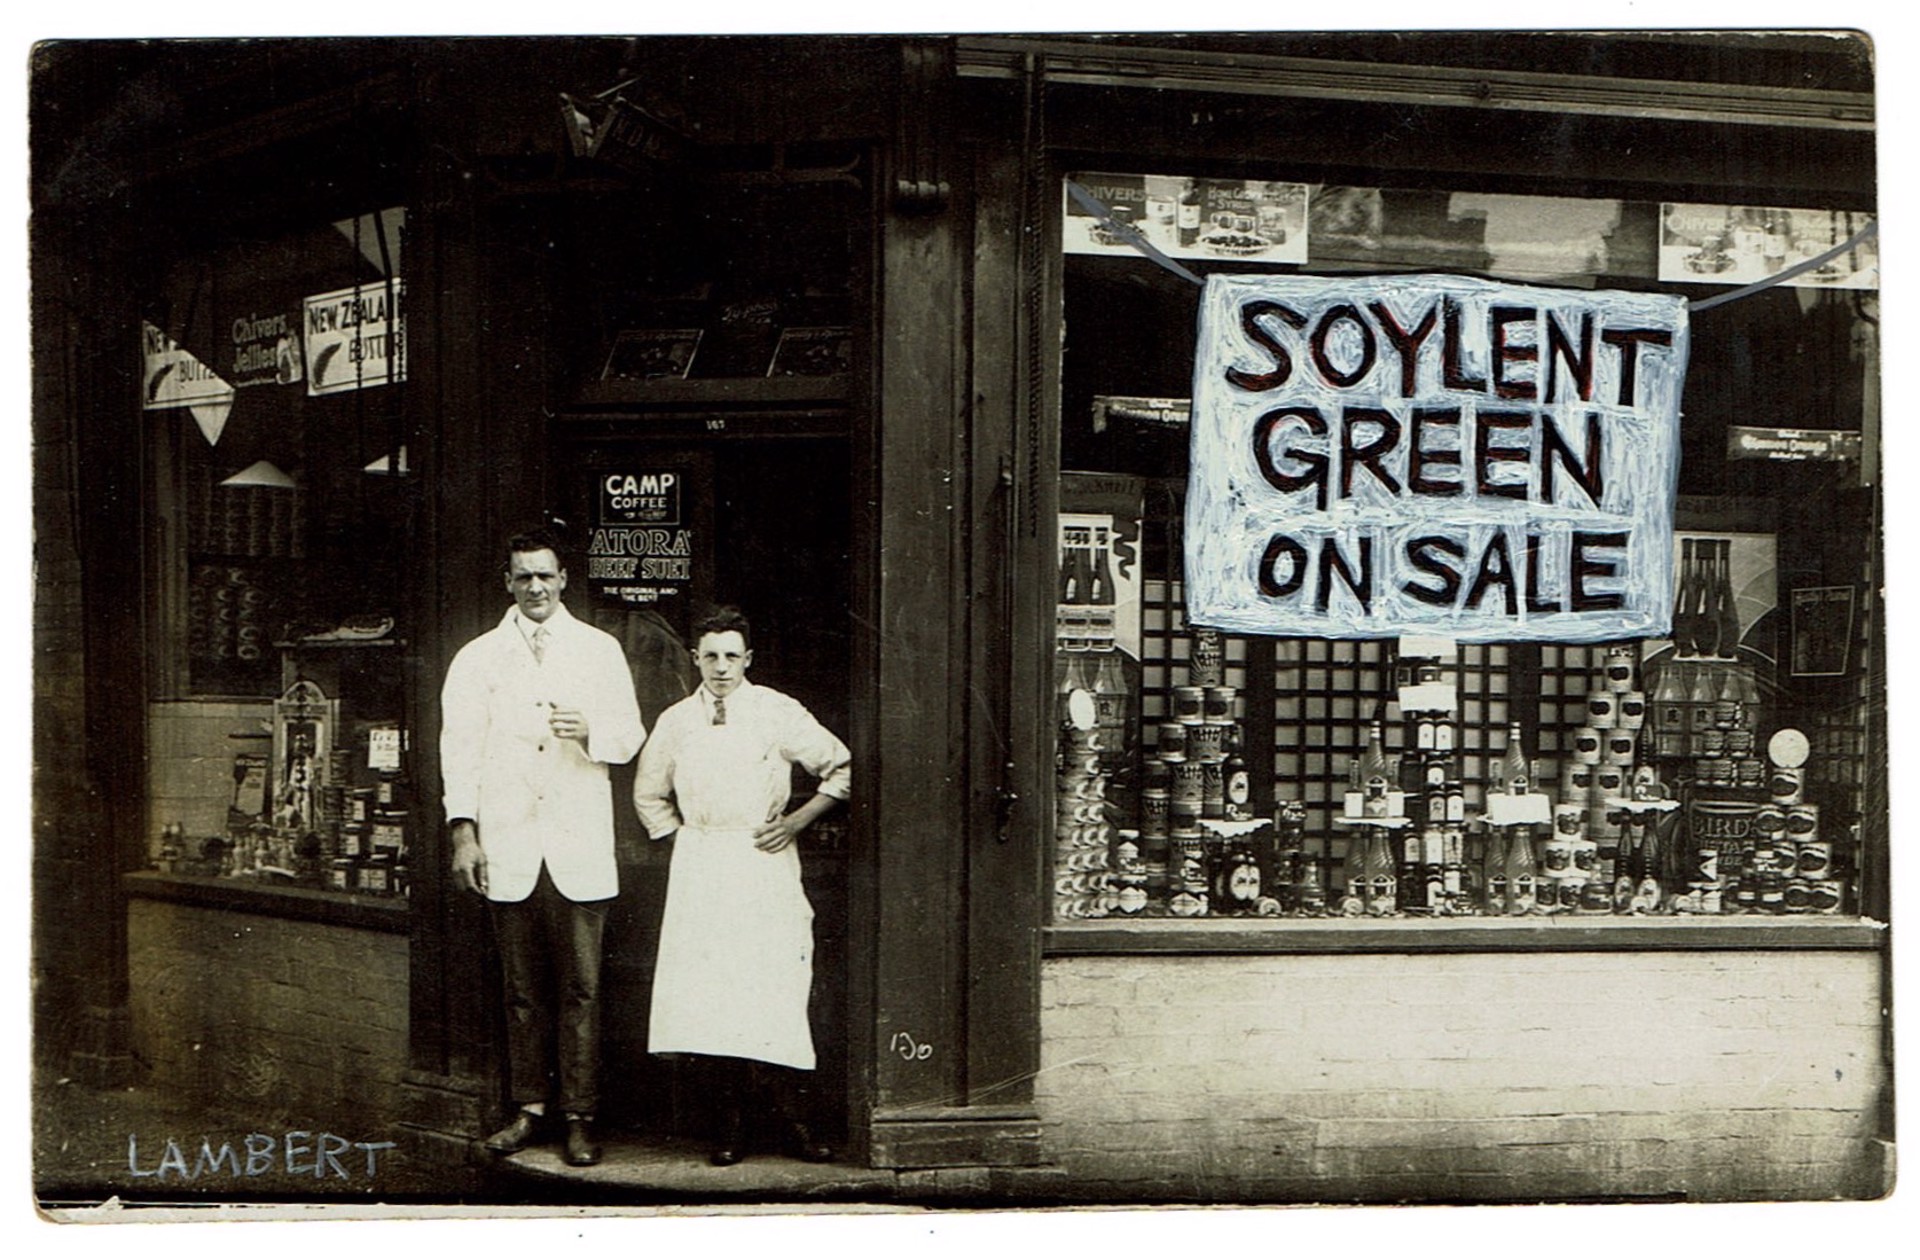 Soylent Green, On Sale  by David Lambert